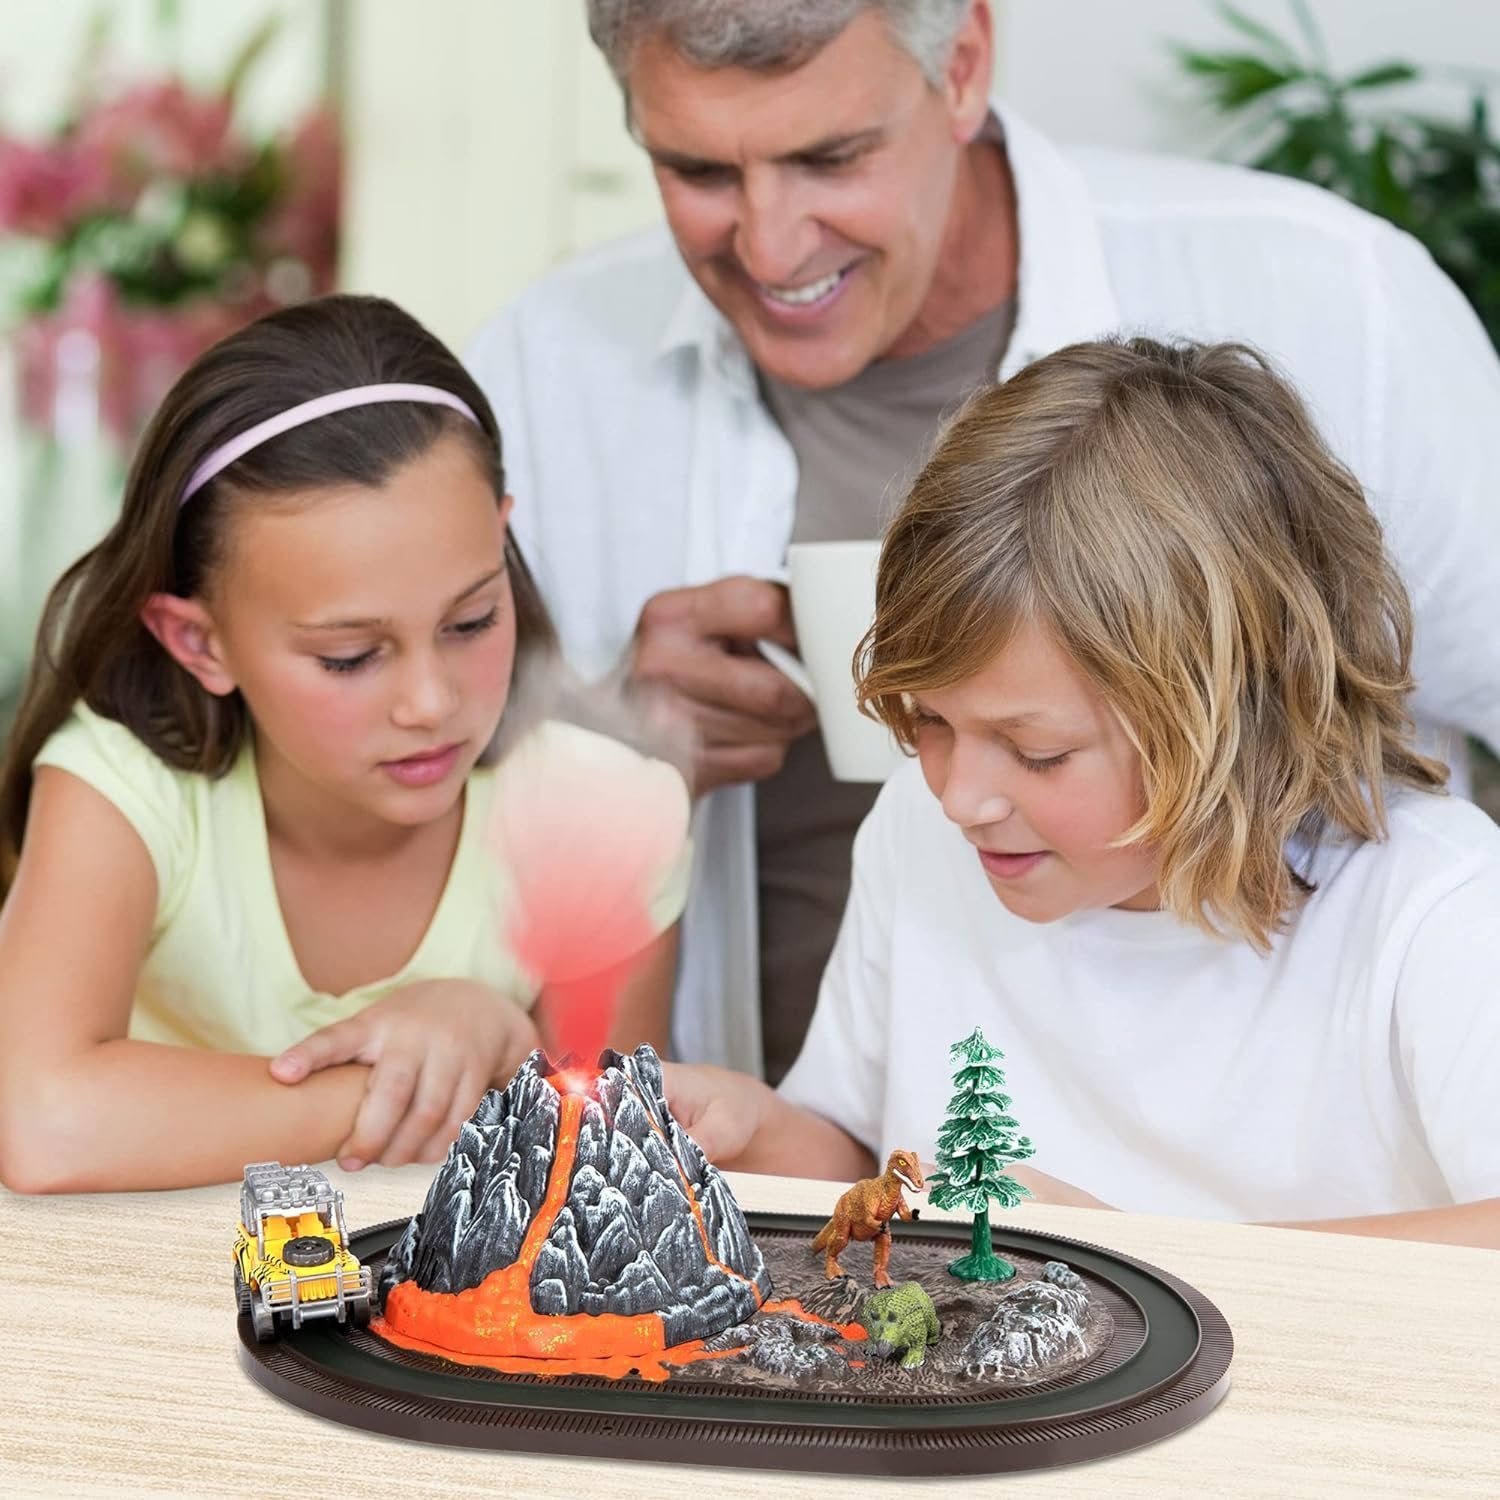 ArtCreativity Volcano Dinosaur Playset for Kids, Mist Spouting Volcano Play Set, Dinosaur Toys for Boys, Volcano Science Kit, Volcano Toy Set with Simulated Volcanic Eruptions, Sounds, Wind-up Truck